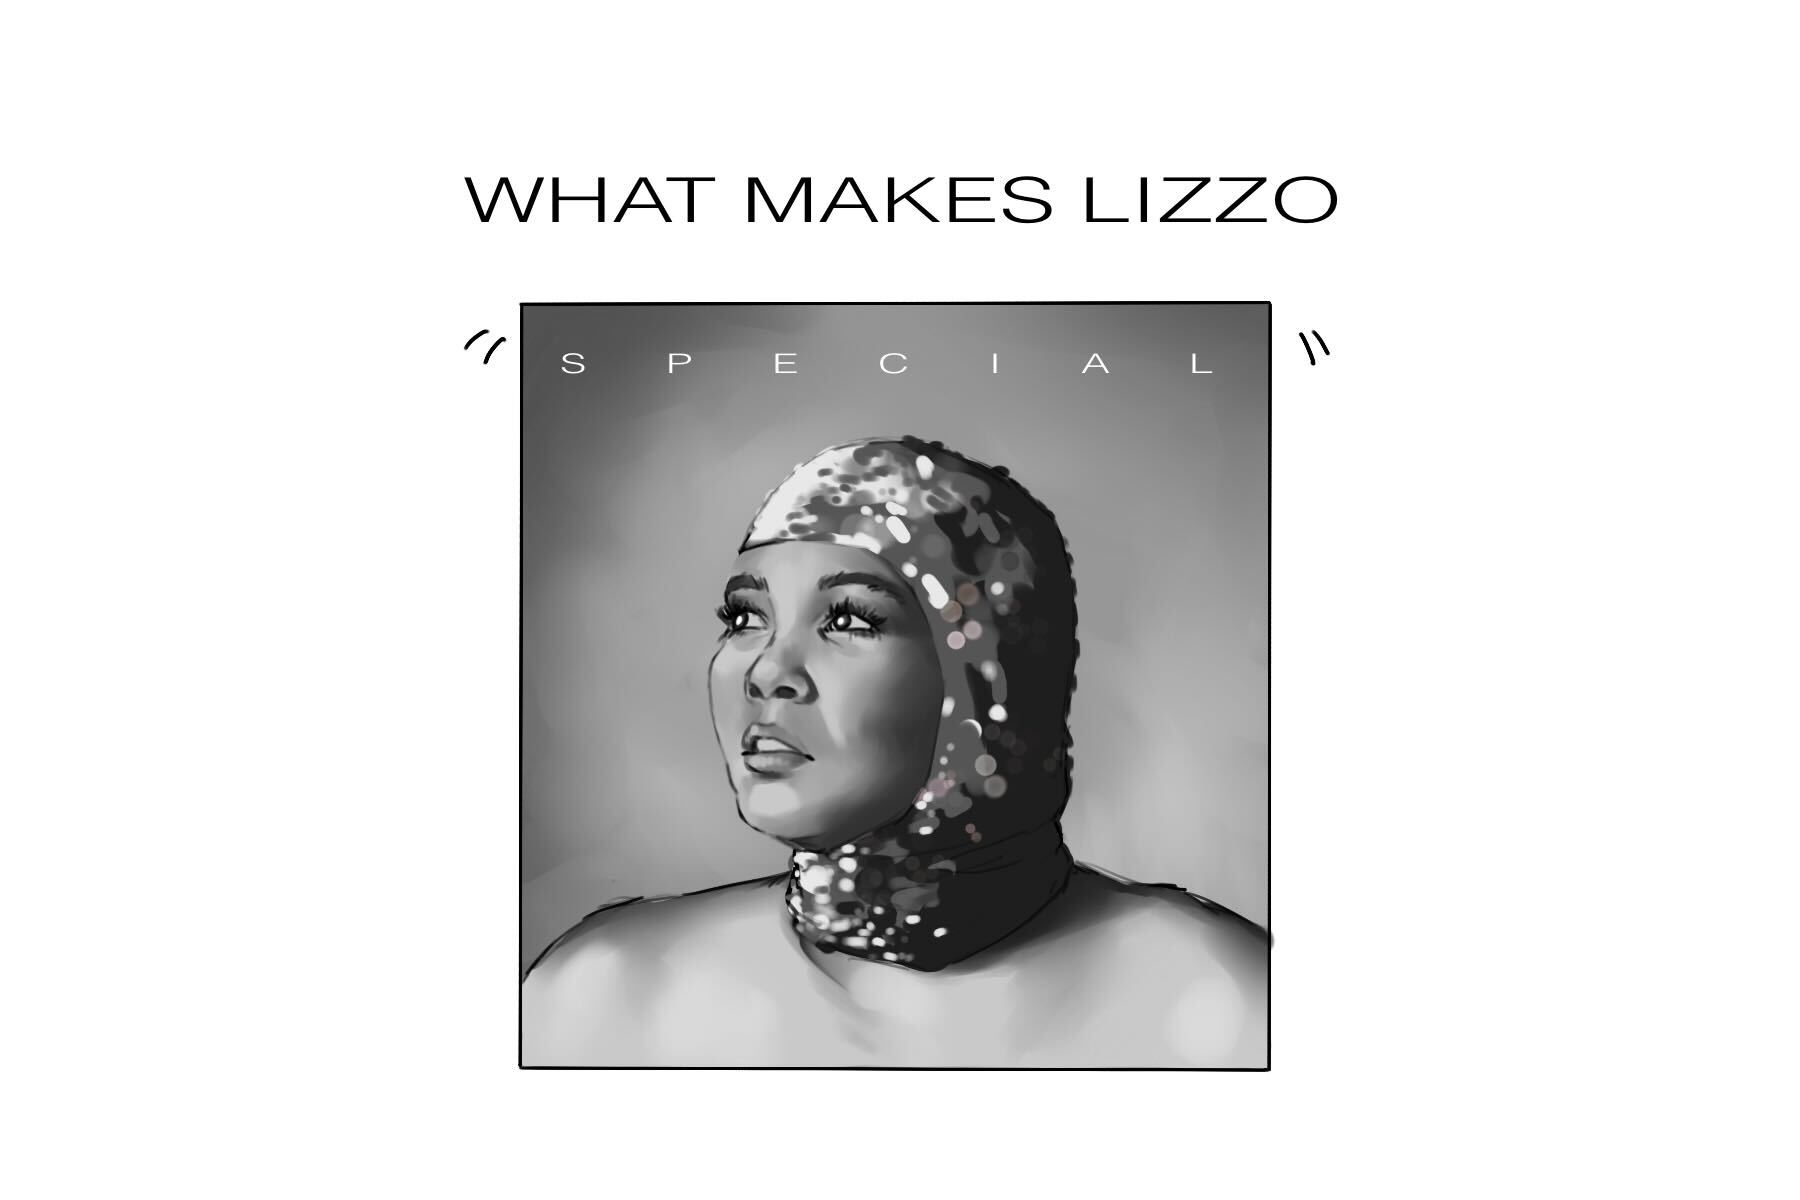 Lizzo's "Special" album cover